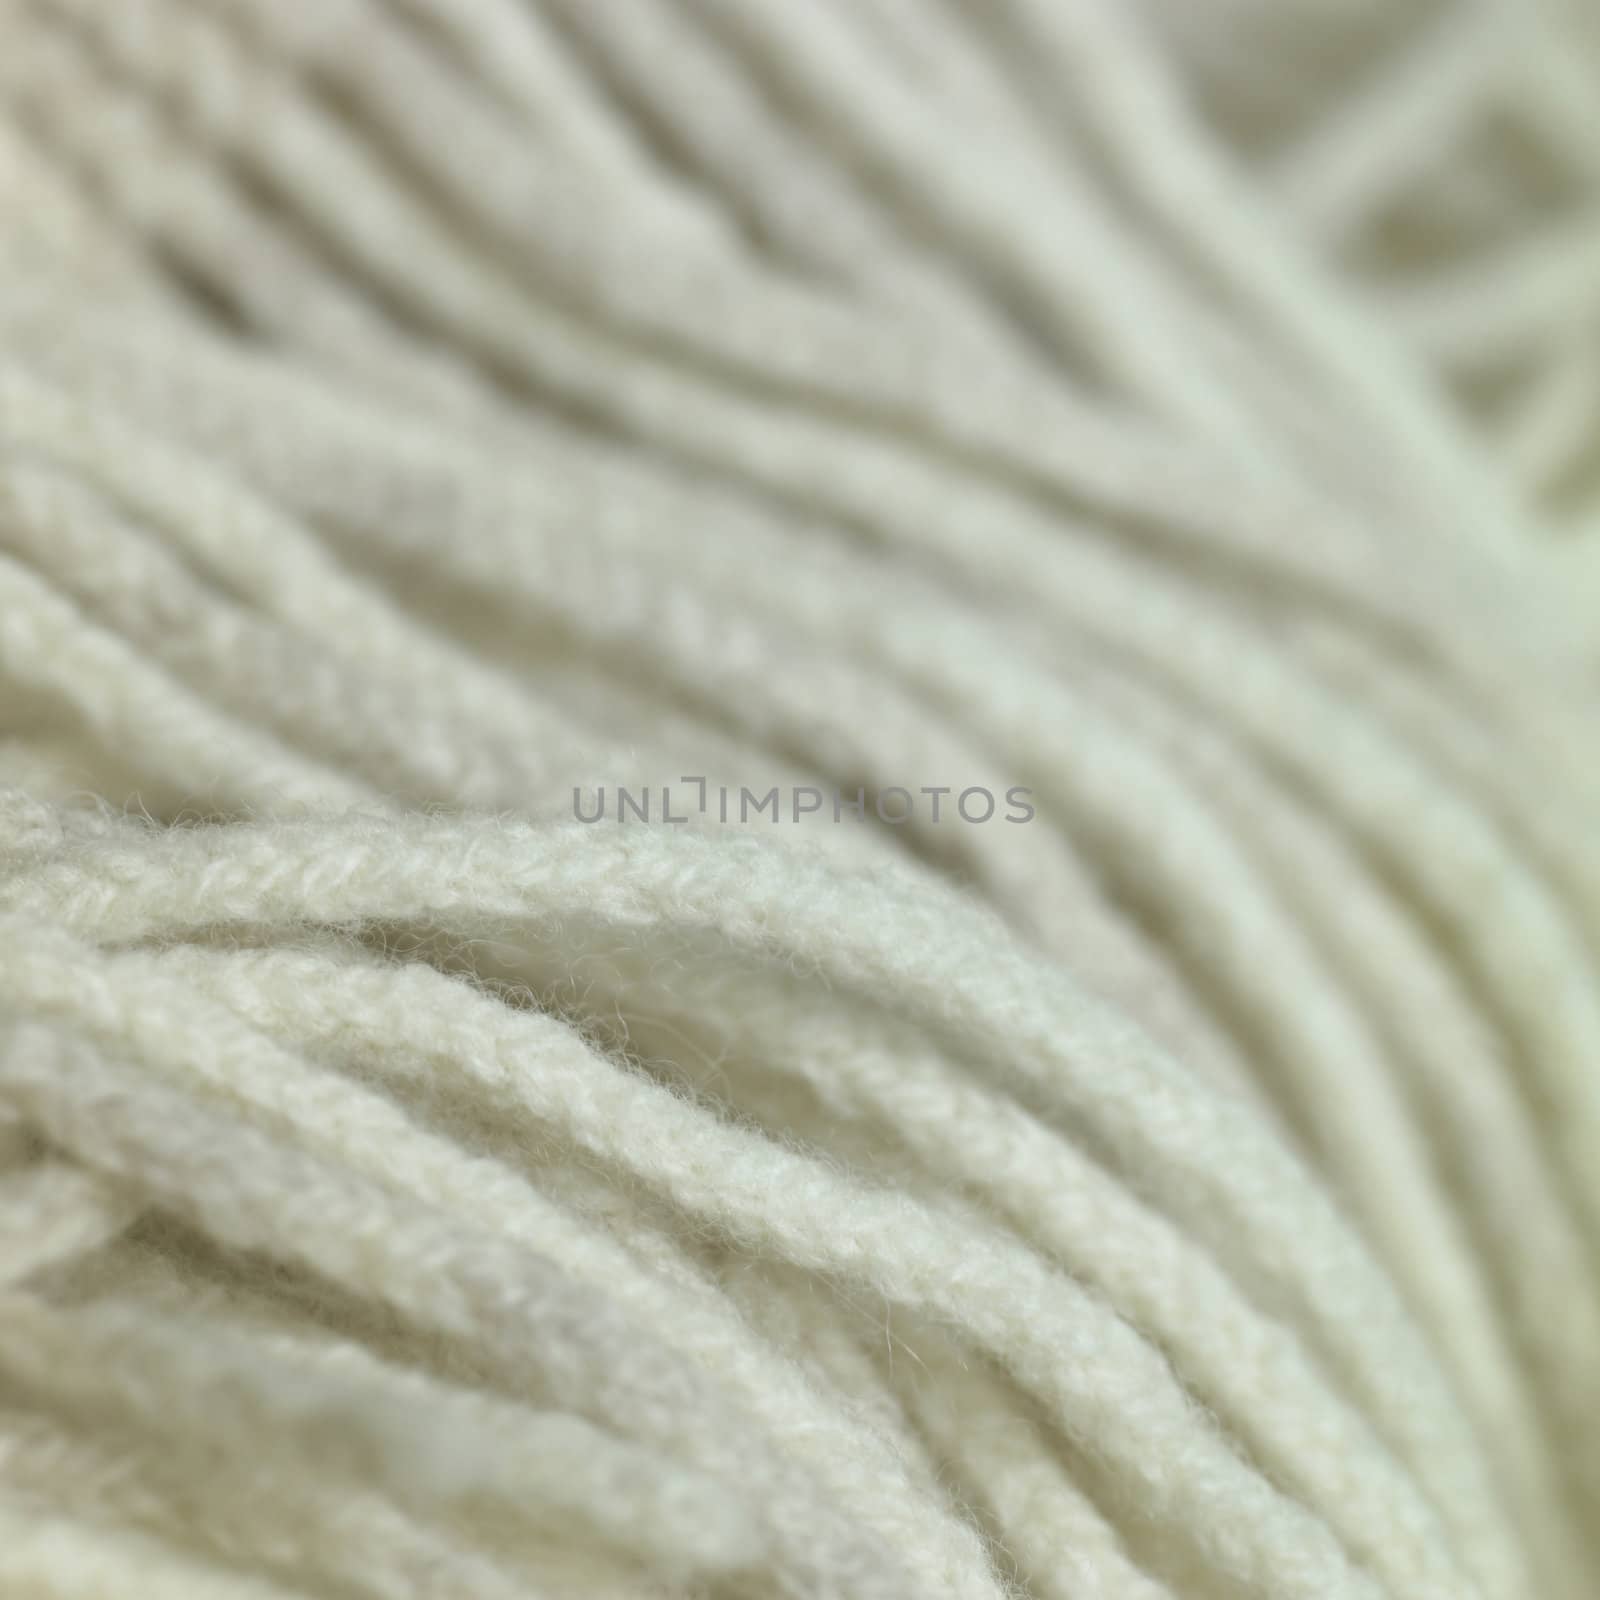 Wool closeup by mmm